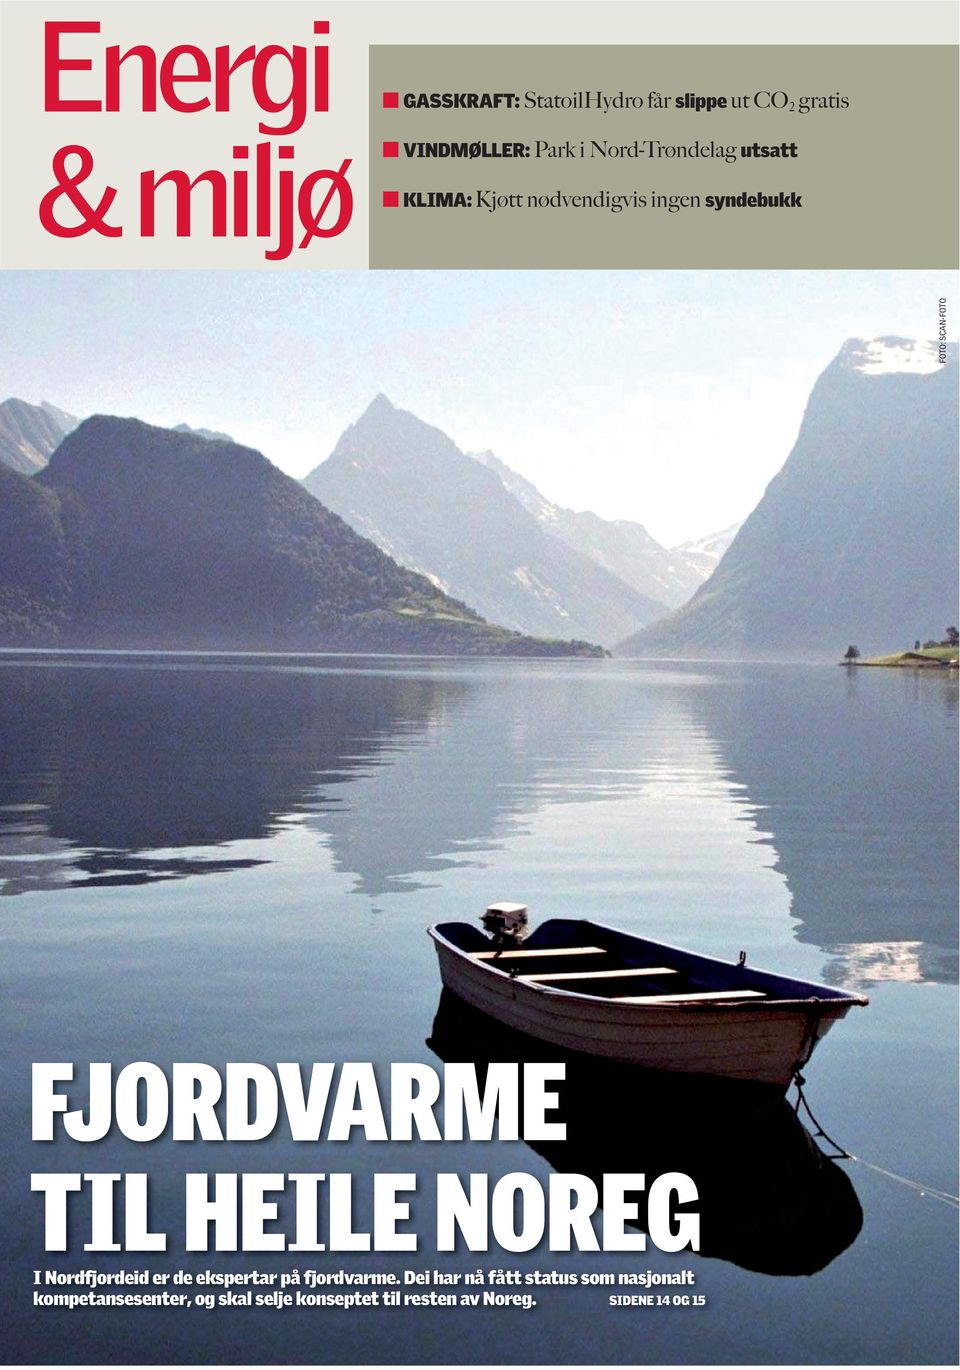 TIL HEILE NOREG I Nordfjordeid er de ekspertar på fjordvarme.